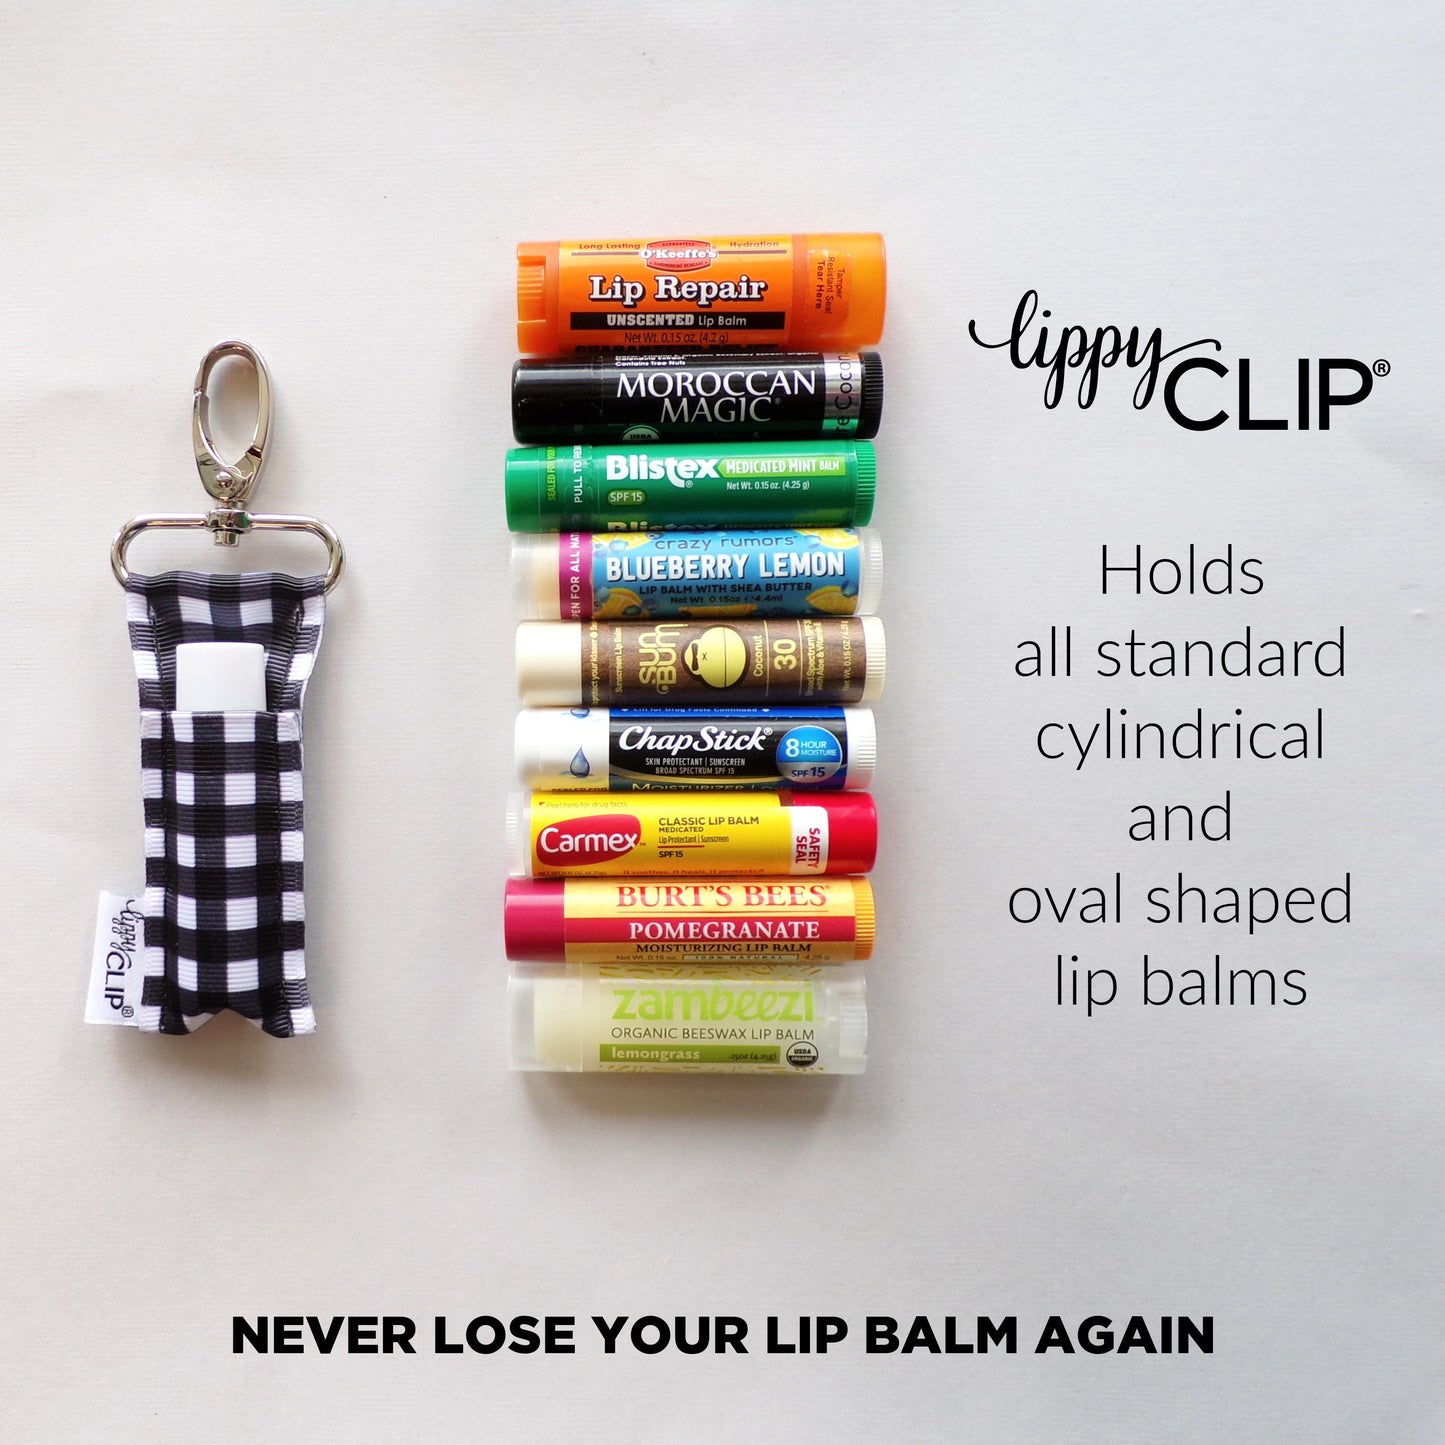 Koala LippyClip® Lip Balm Holder